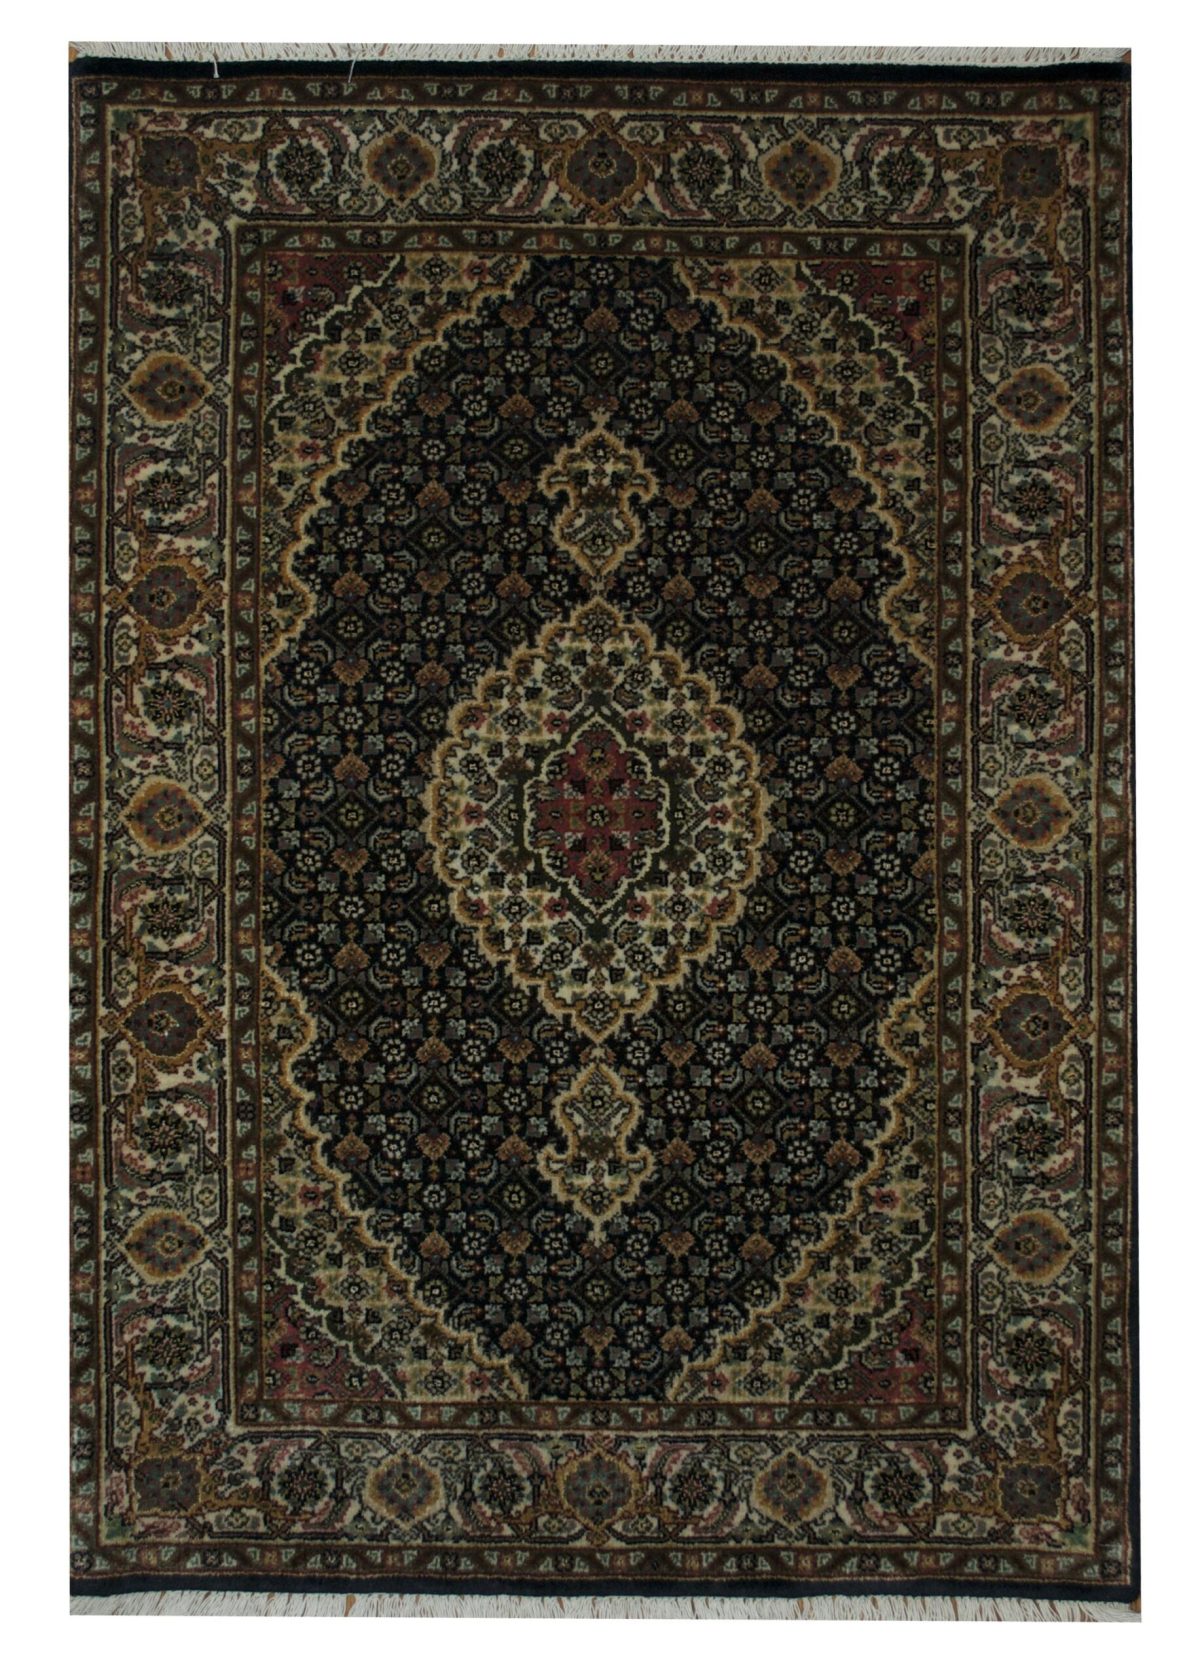 Tabriz 2' x 3' Wool Handmade Area Rug - Shabahang Royal Carpet